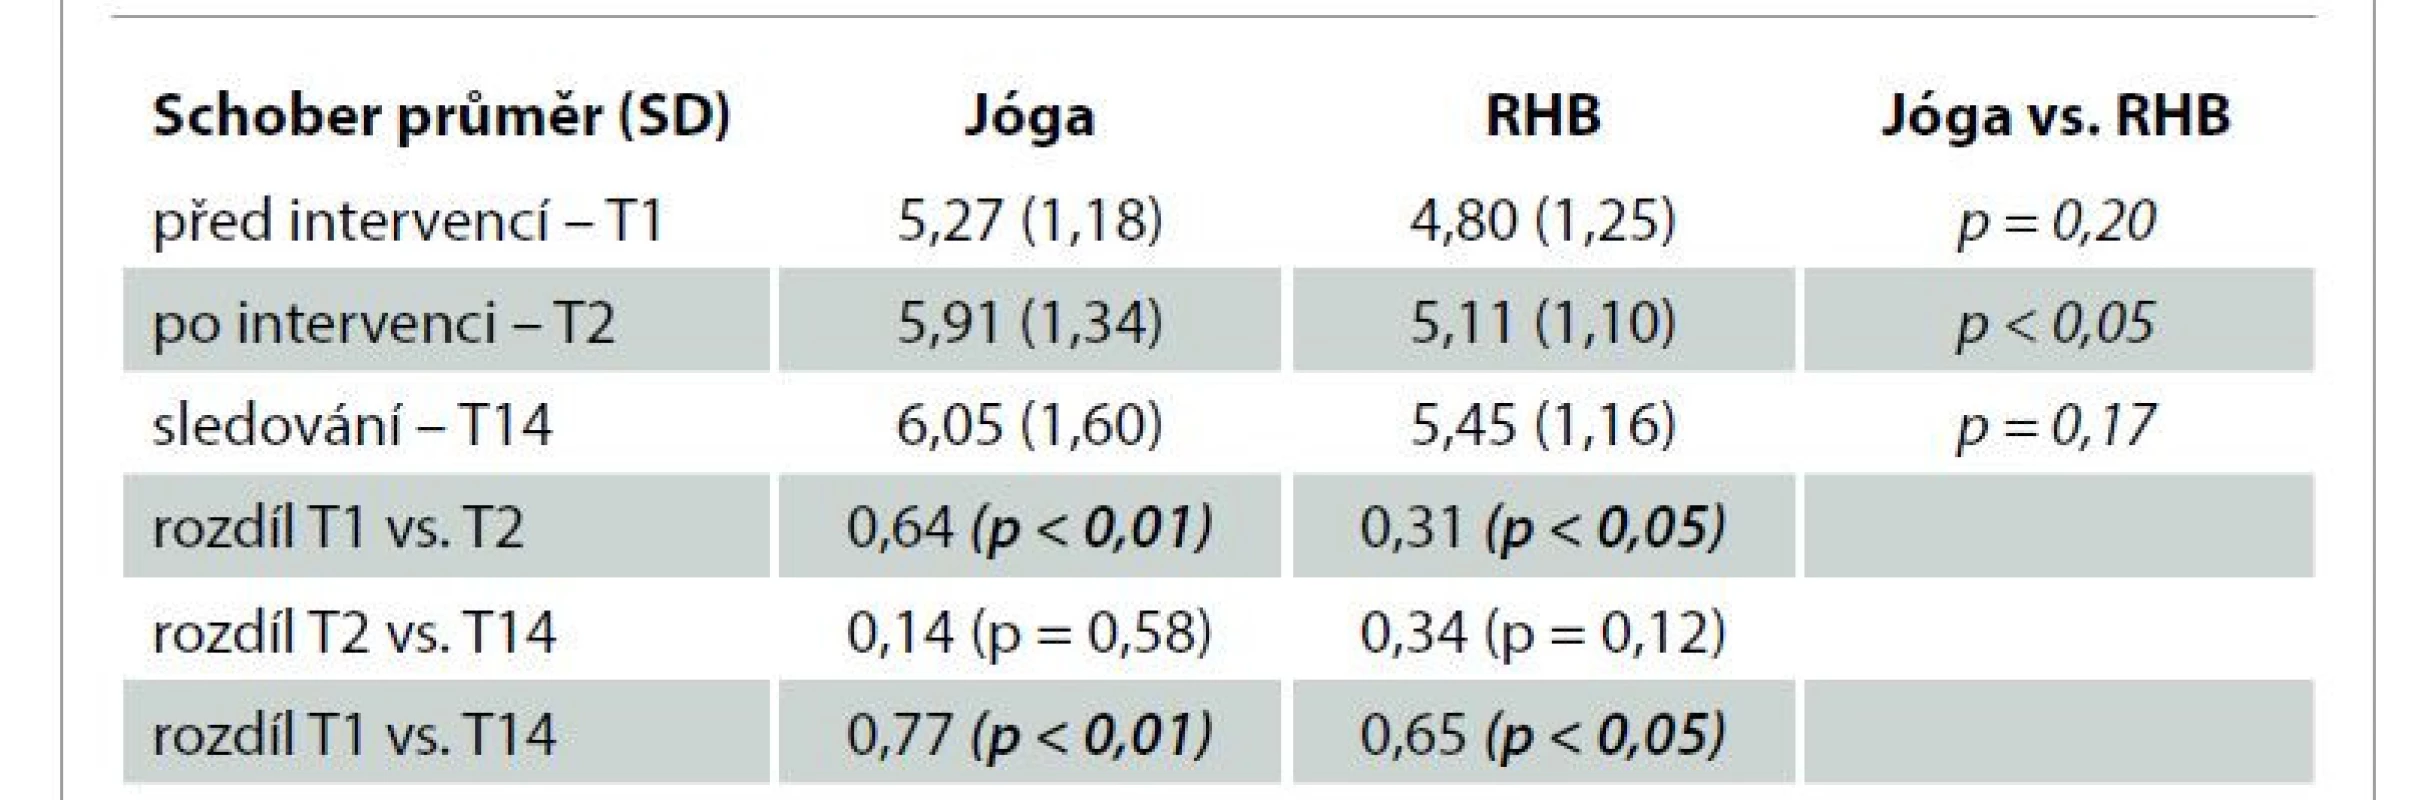 Vývoj hodnot Schoberovy distance v čase a porovnání mezi skupinou
Jóga a RHB.<br>
Tab. 5. Changes of the Schober’s distance score in time and differences between the
Yoga and Rehabilitation groups.